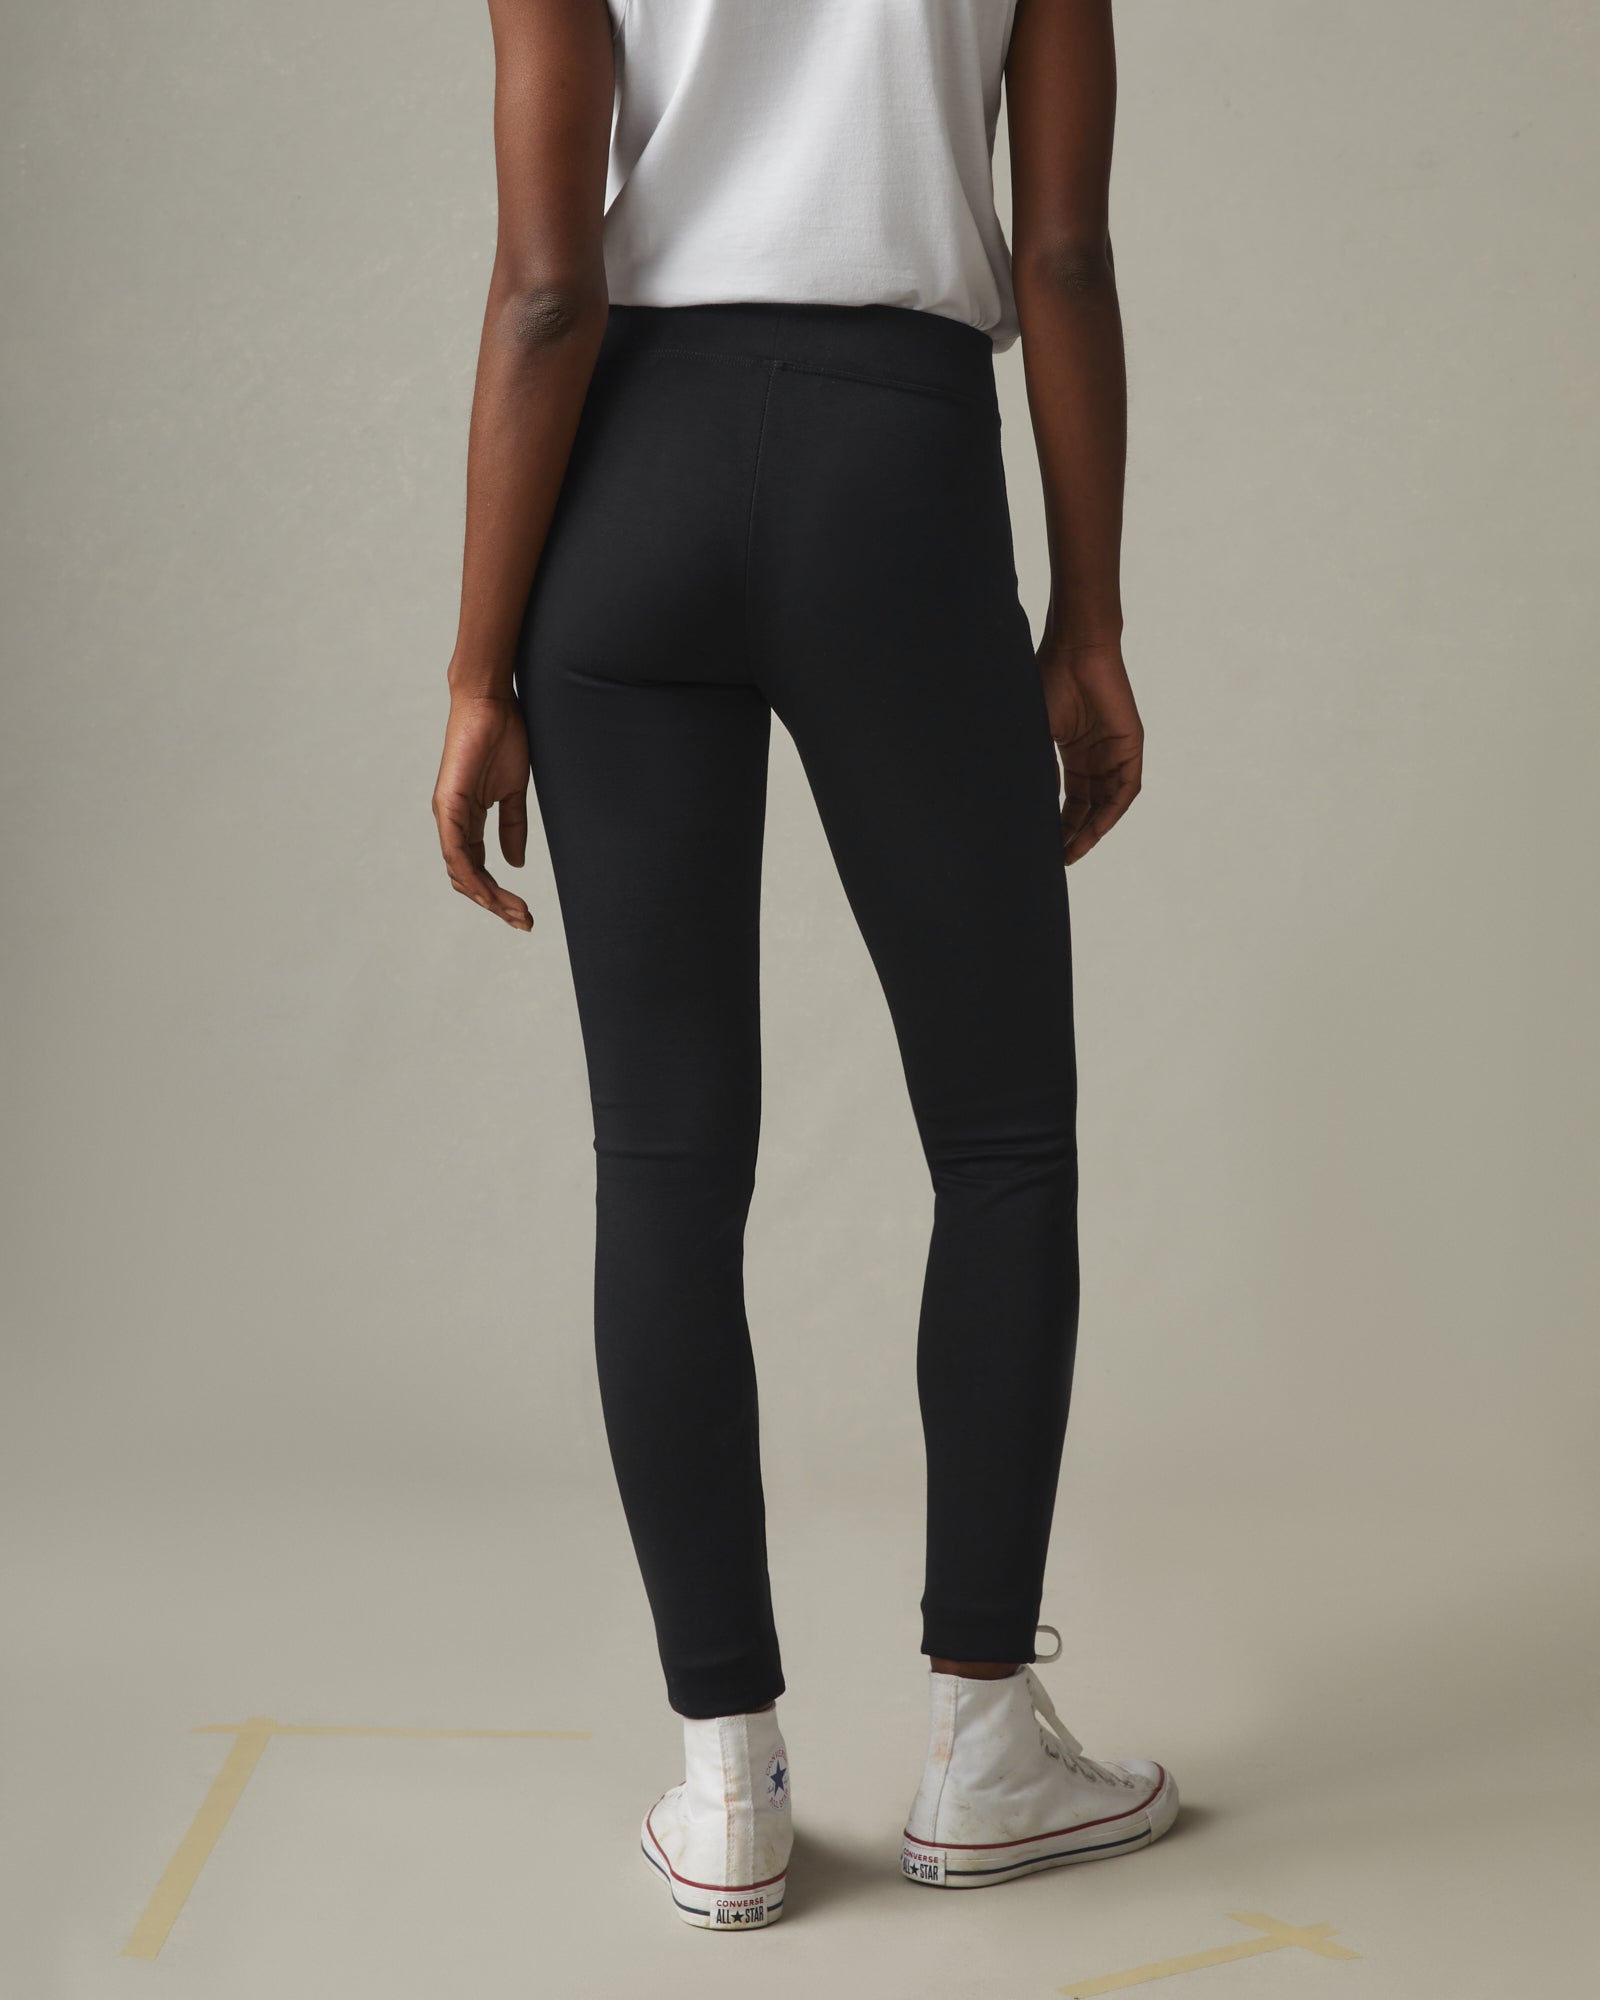 Black L Decathlon Leggings discount 71% WOMEN FASHION Trousers Basic 